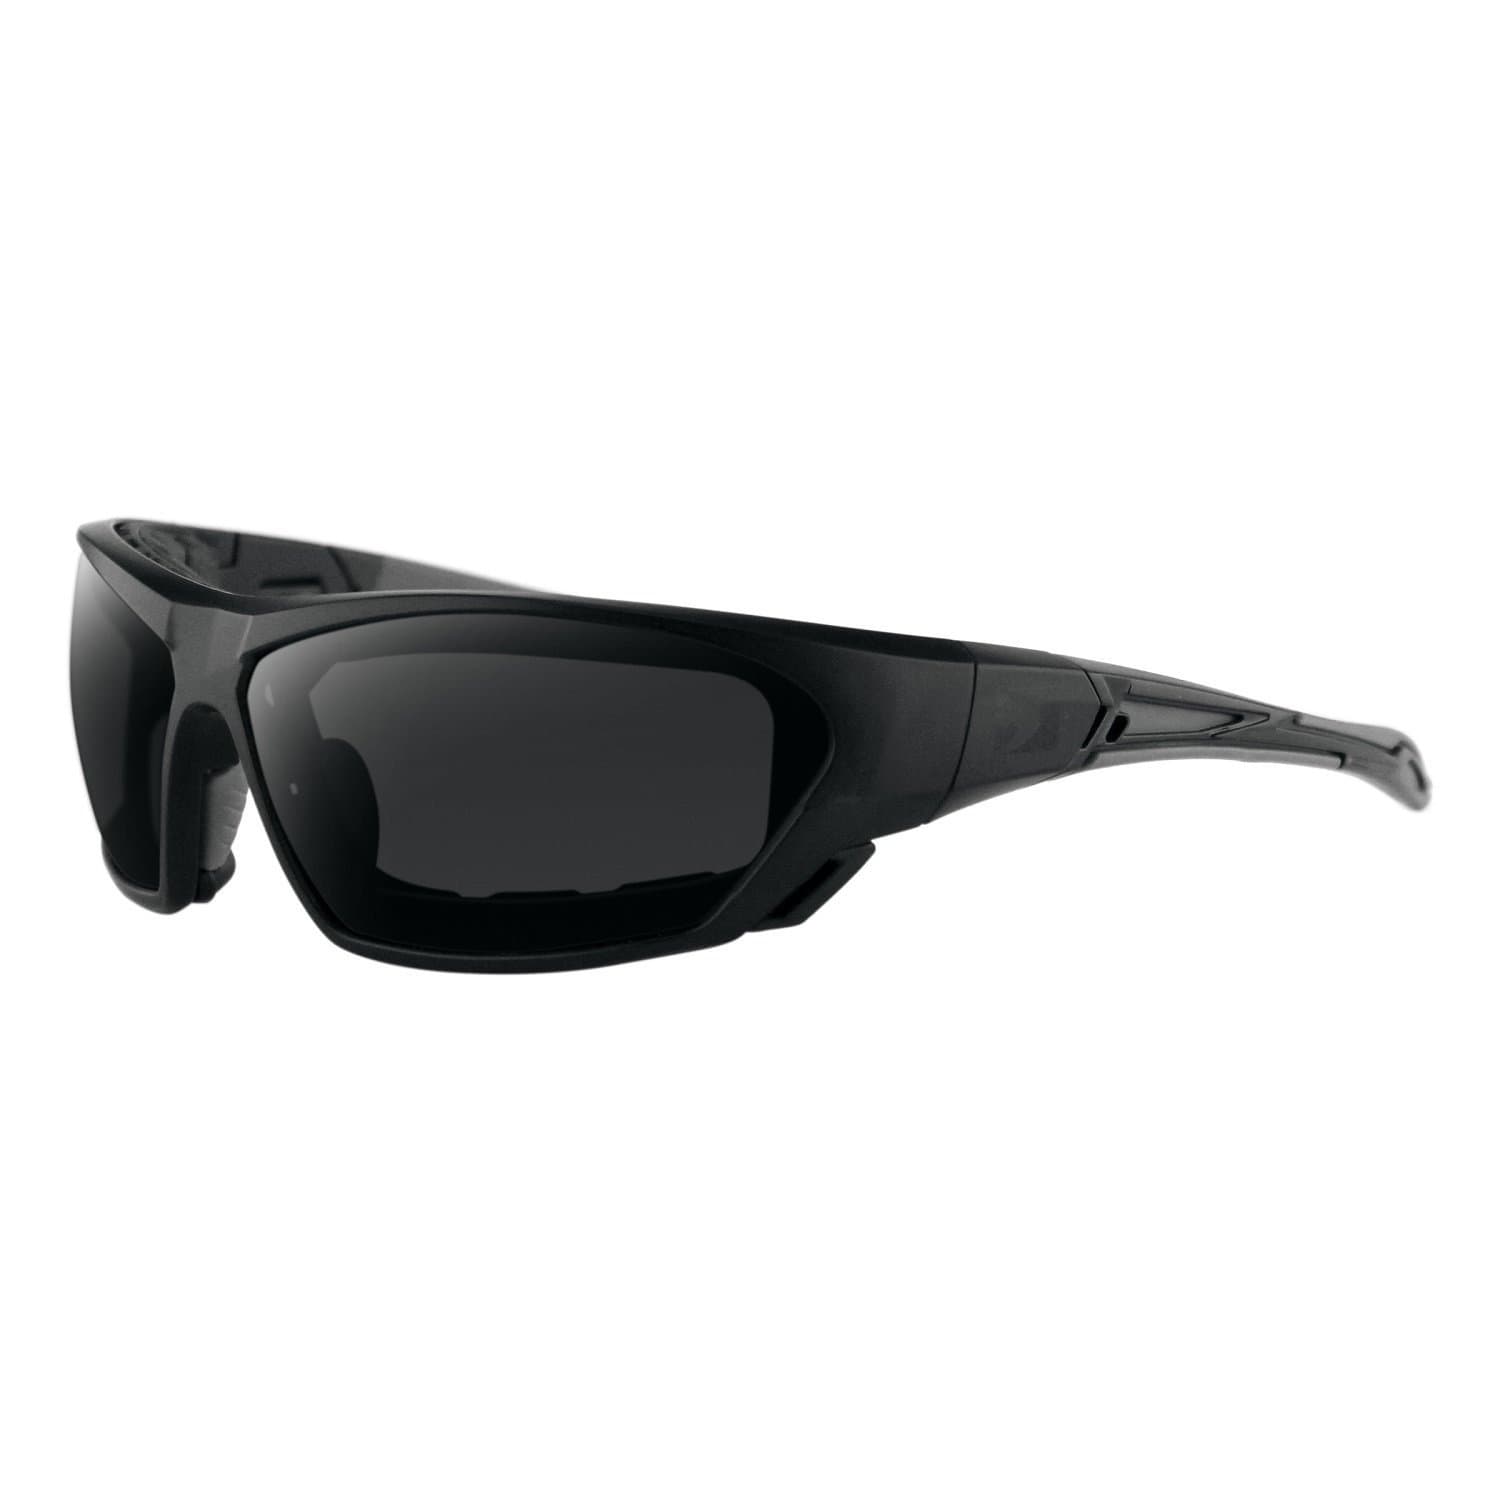 Bobster Apparel : Eyewear - Sunglasses Bobster Crossover Sunglasses Matte Black Frame Smoked Lens